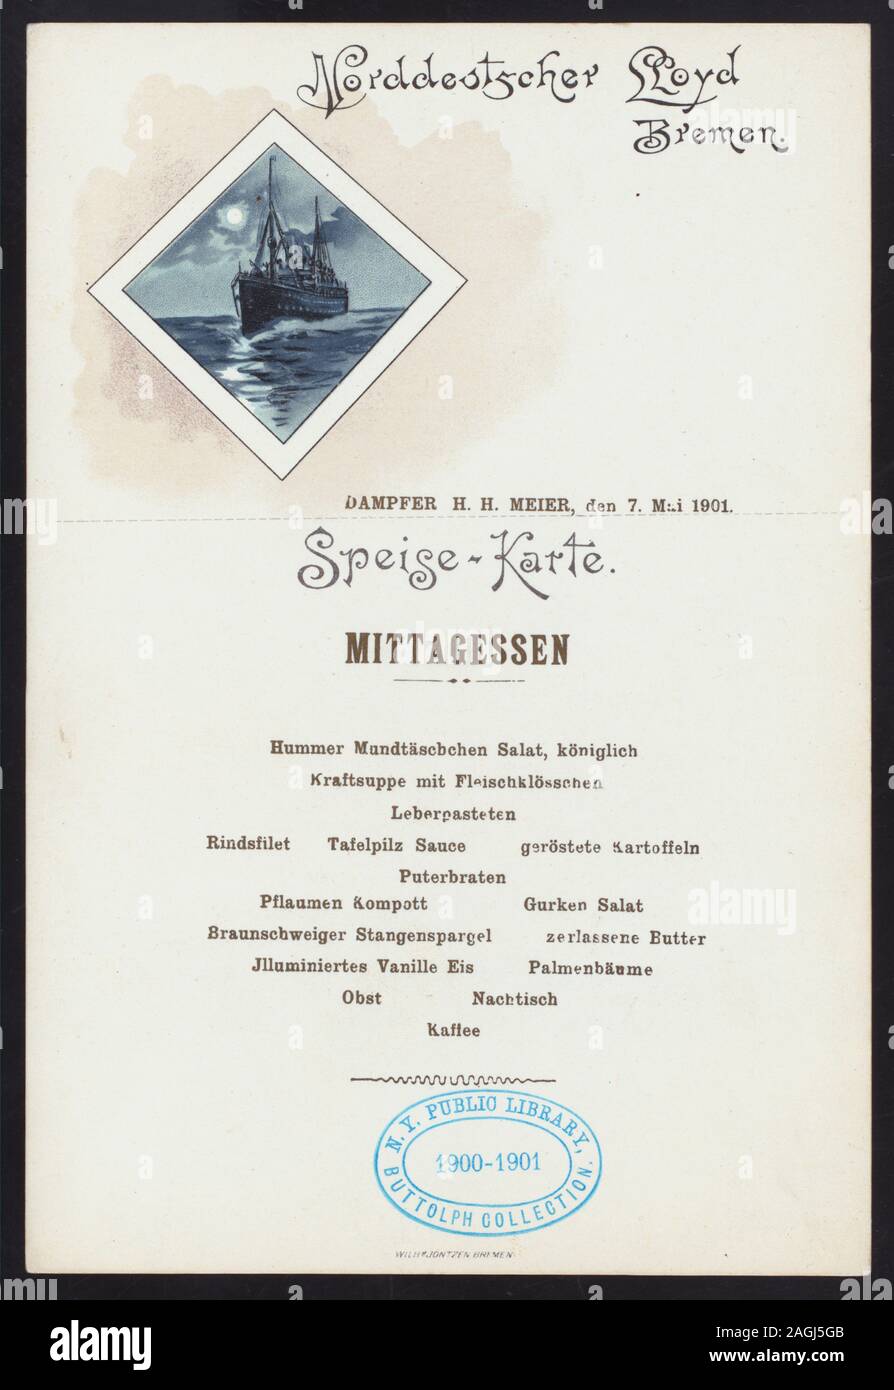 MENU IN GERMAN; INSET OF STEAMER; BACK OF MENU FOR USE AS POSTCARD Citation/Reference: 1901-1176; MIDDAY DINNER [held by] NORDDEUTSCHER LLOYD BREMEN [at] EN ROUTE ABOARD DAMPFER H.H. MEIER (SS;) Stock Photo